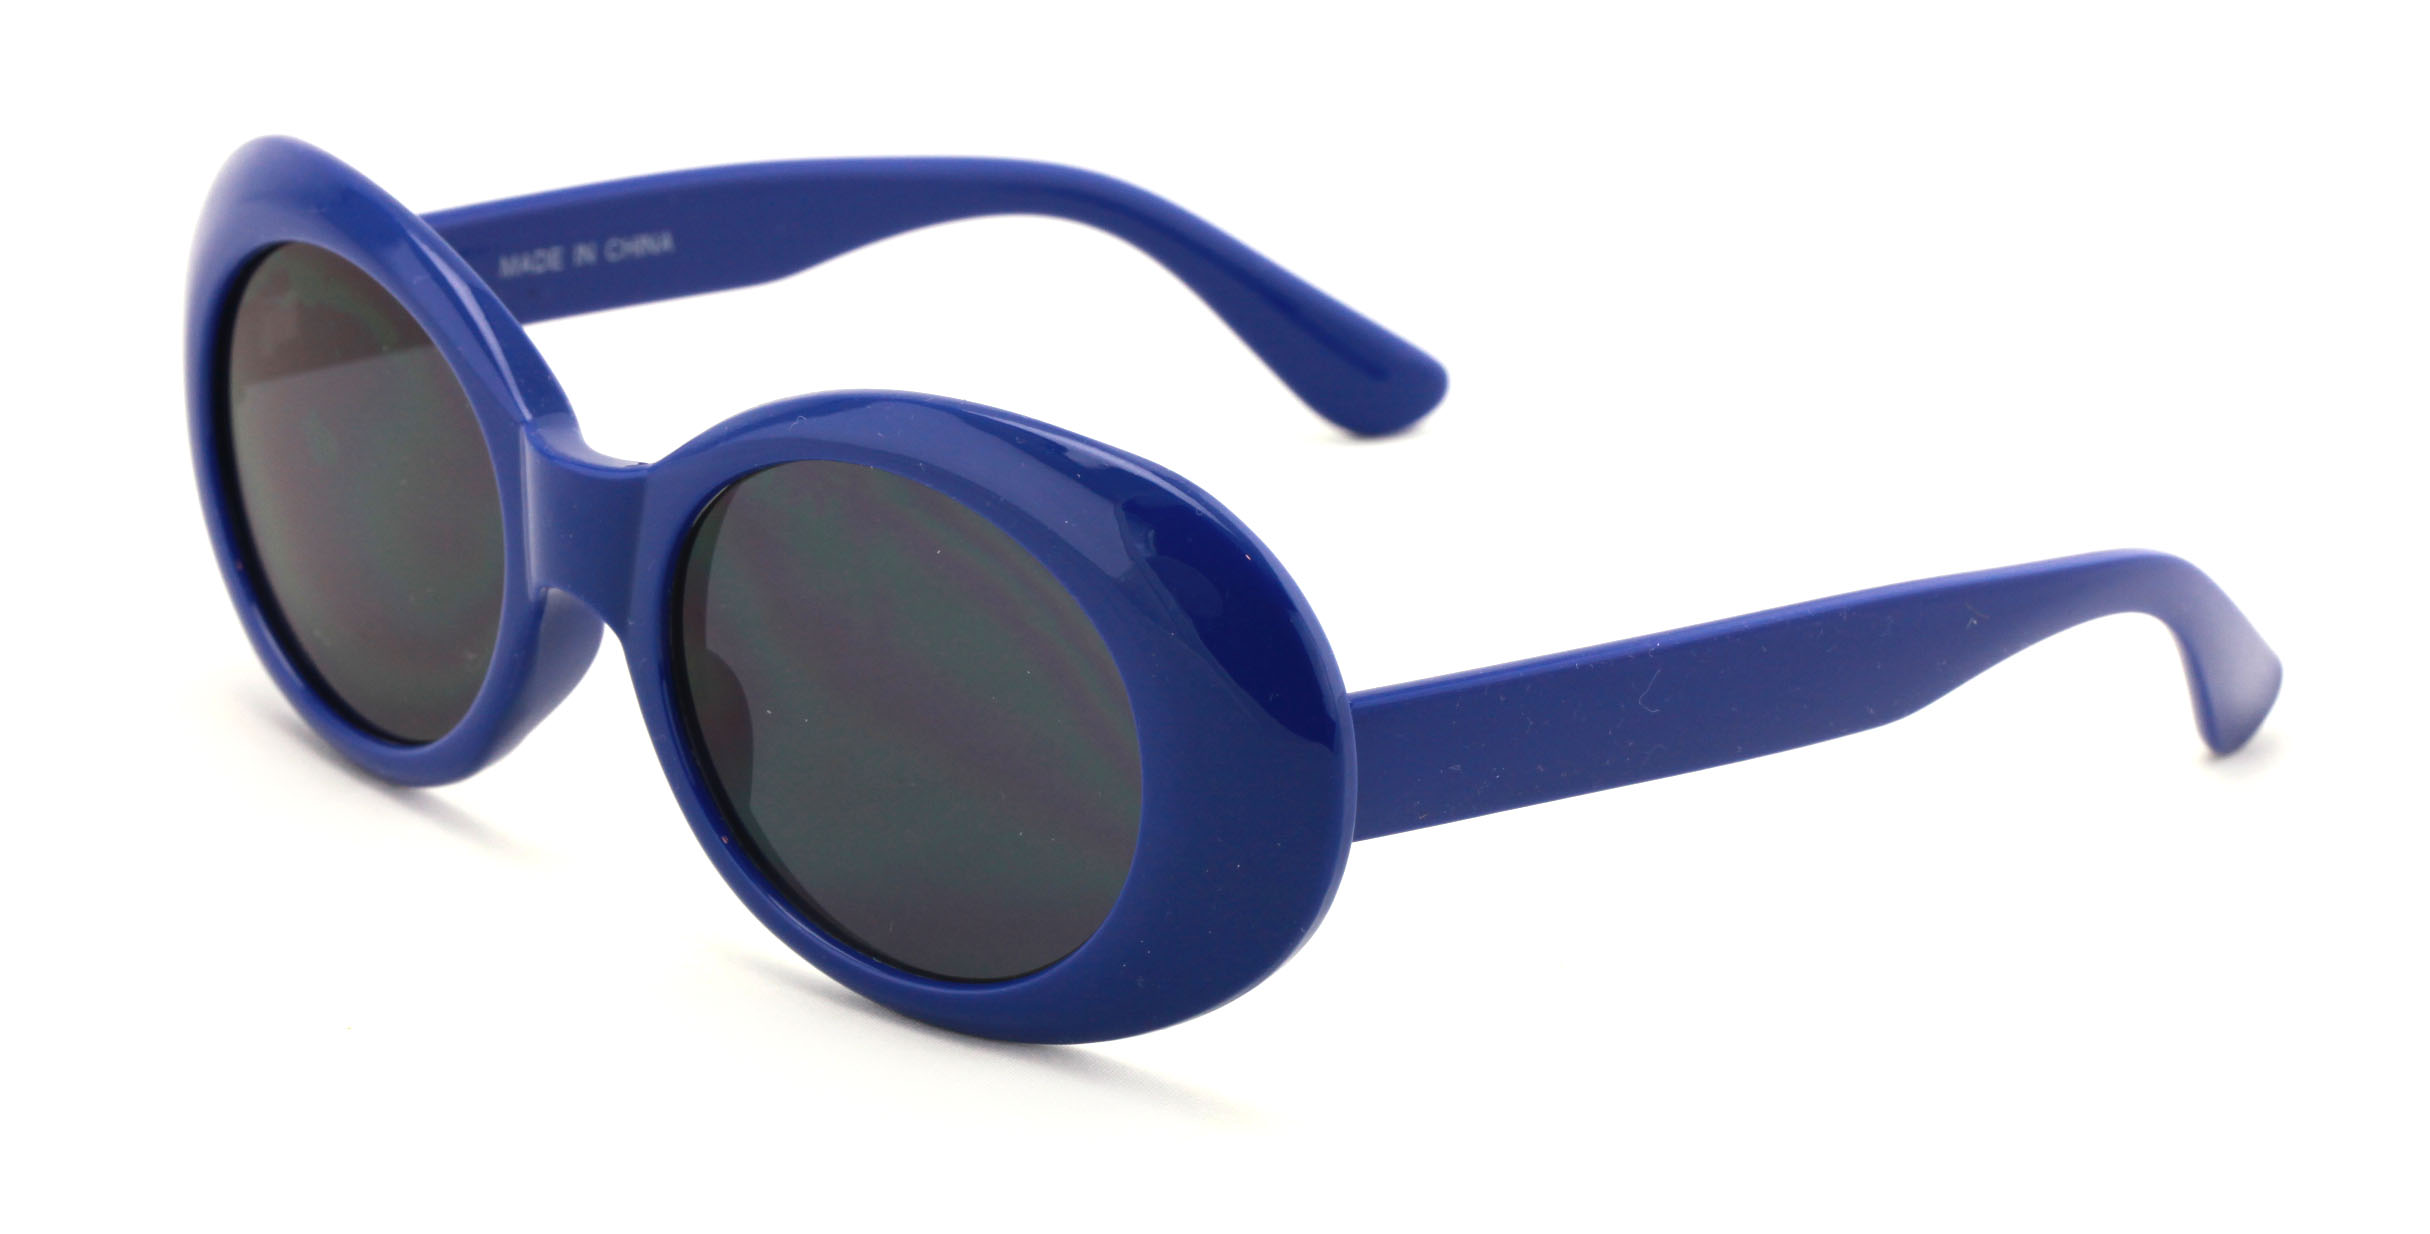 V.W.E. Vintage Sunglasses UV400 Bold Retro Oval Mod Thick Frame Sunglasses Clout Goggles with Dark Round Lens - image 1 of 3